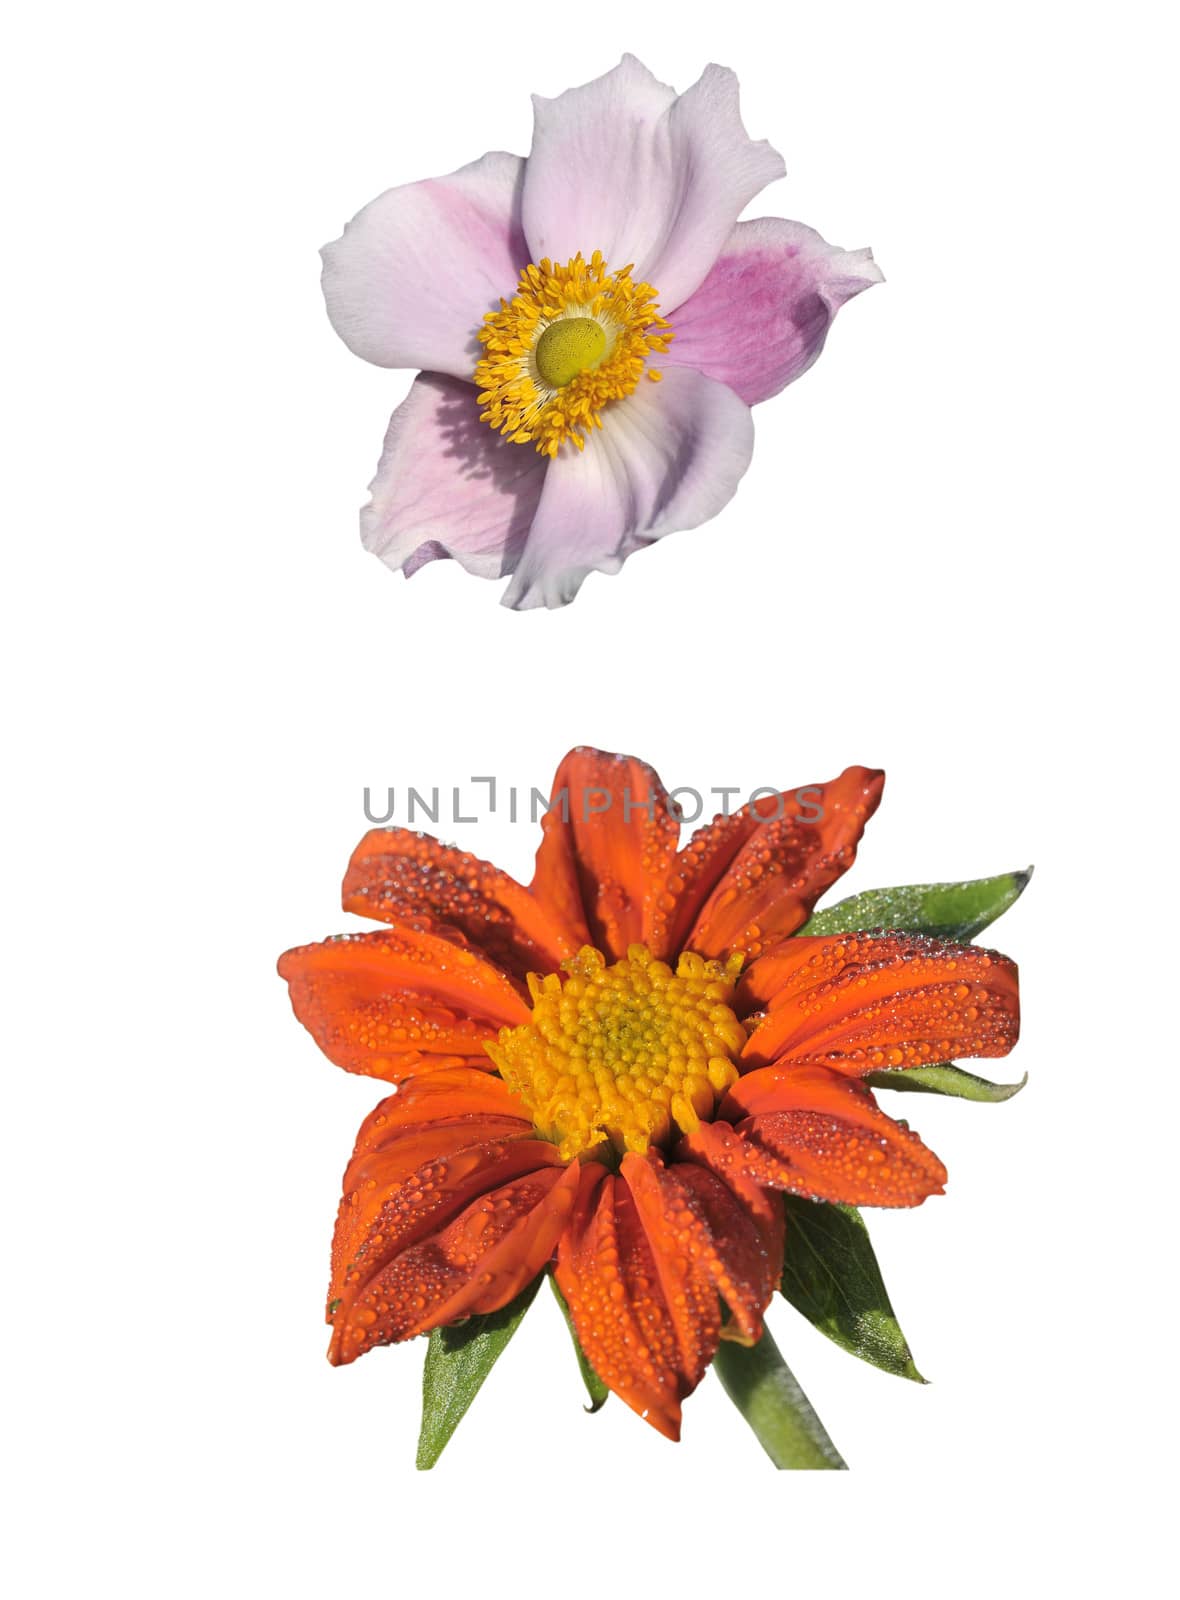 Anemone and Tithonia Speciosa by Hbak